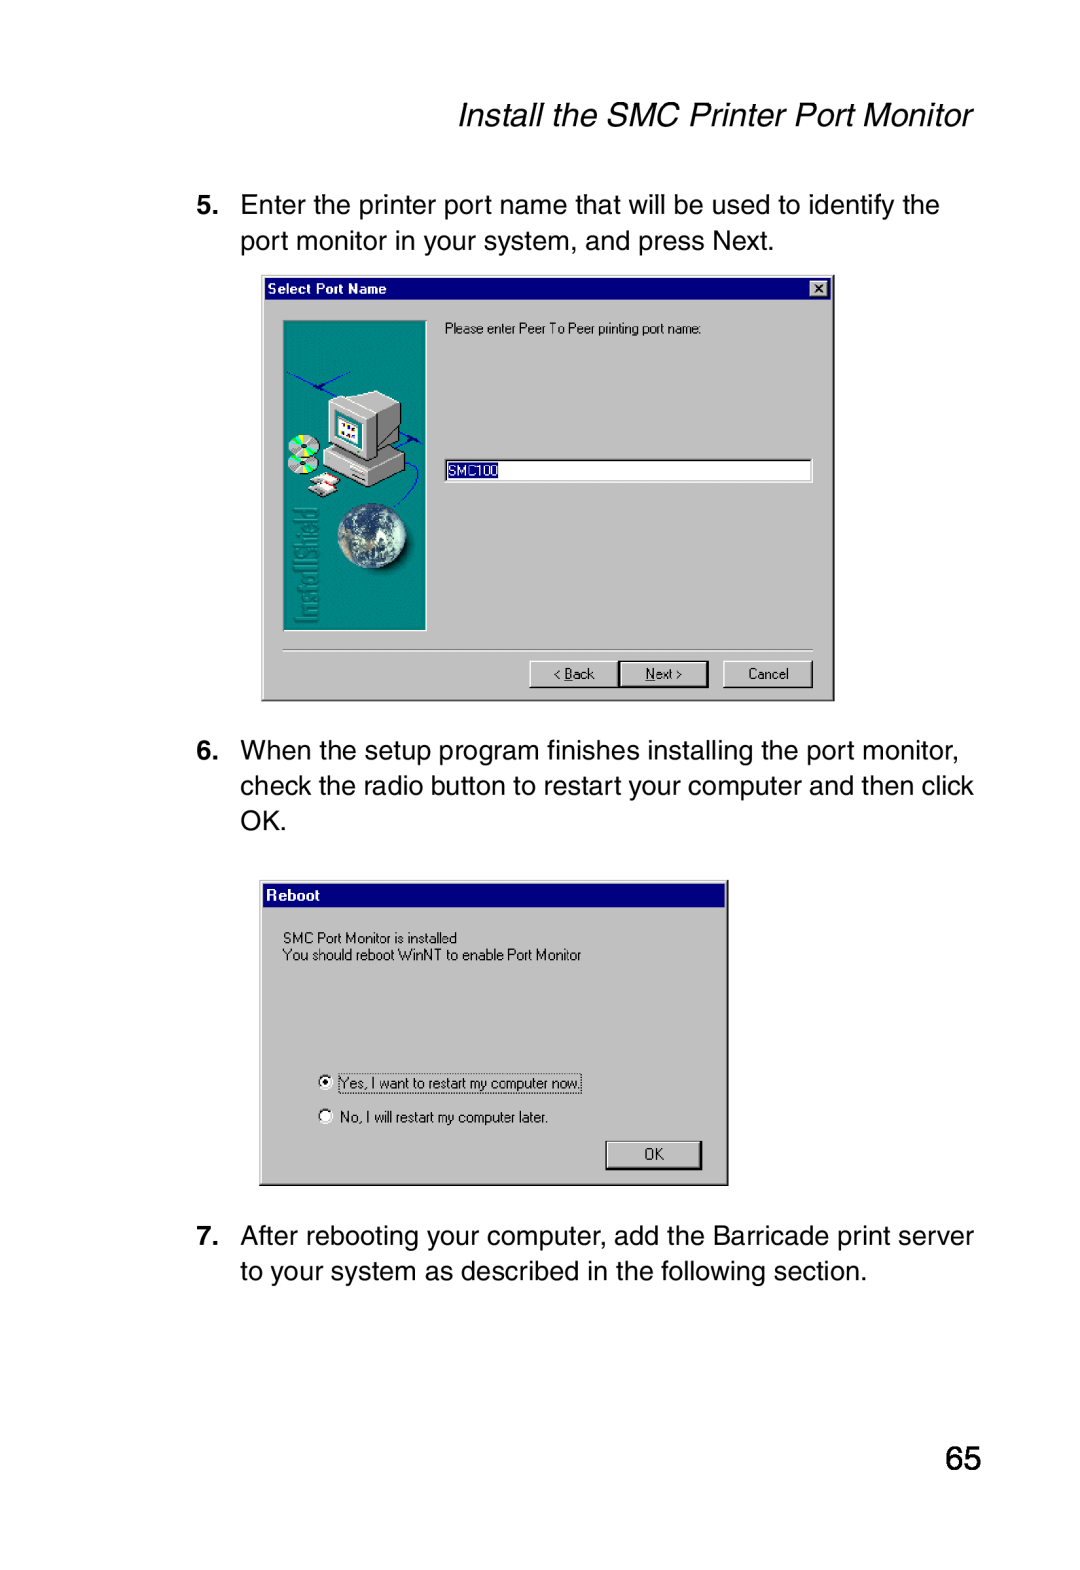 Sharp S M C 7 0 0 4 A B R, SMC7004ABR manual Install the SMC Printer Port Monitor 